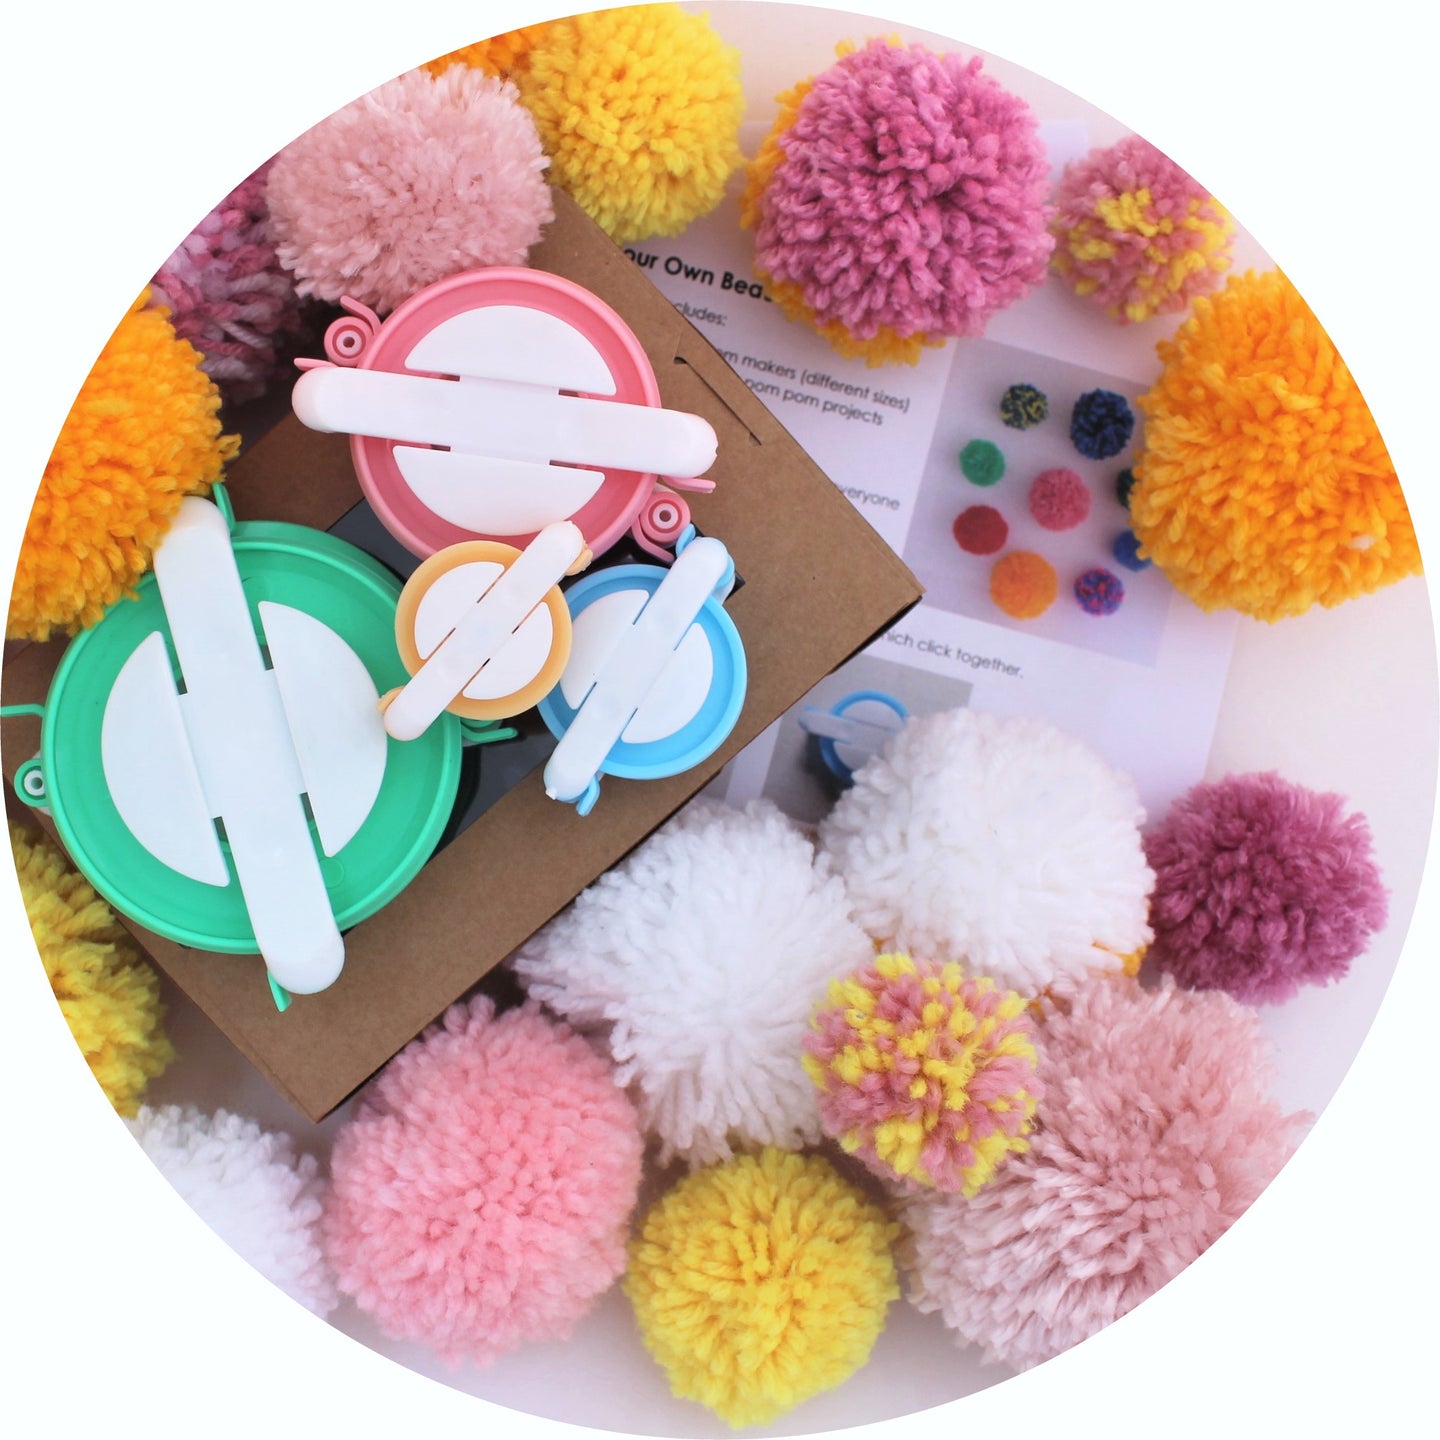 Kids six month craft kit subscription - MakeKit DIY Craft Kits